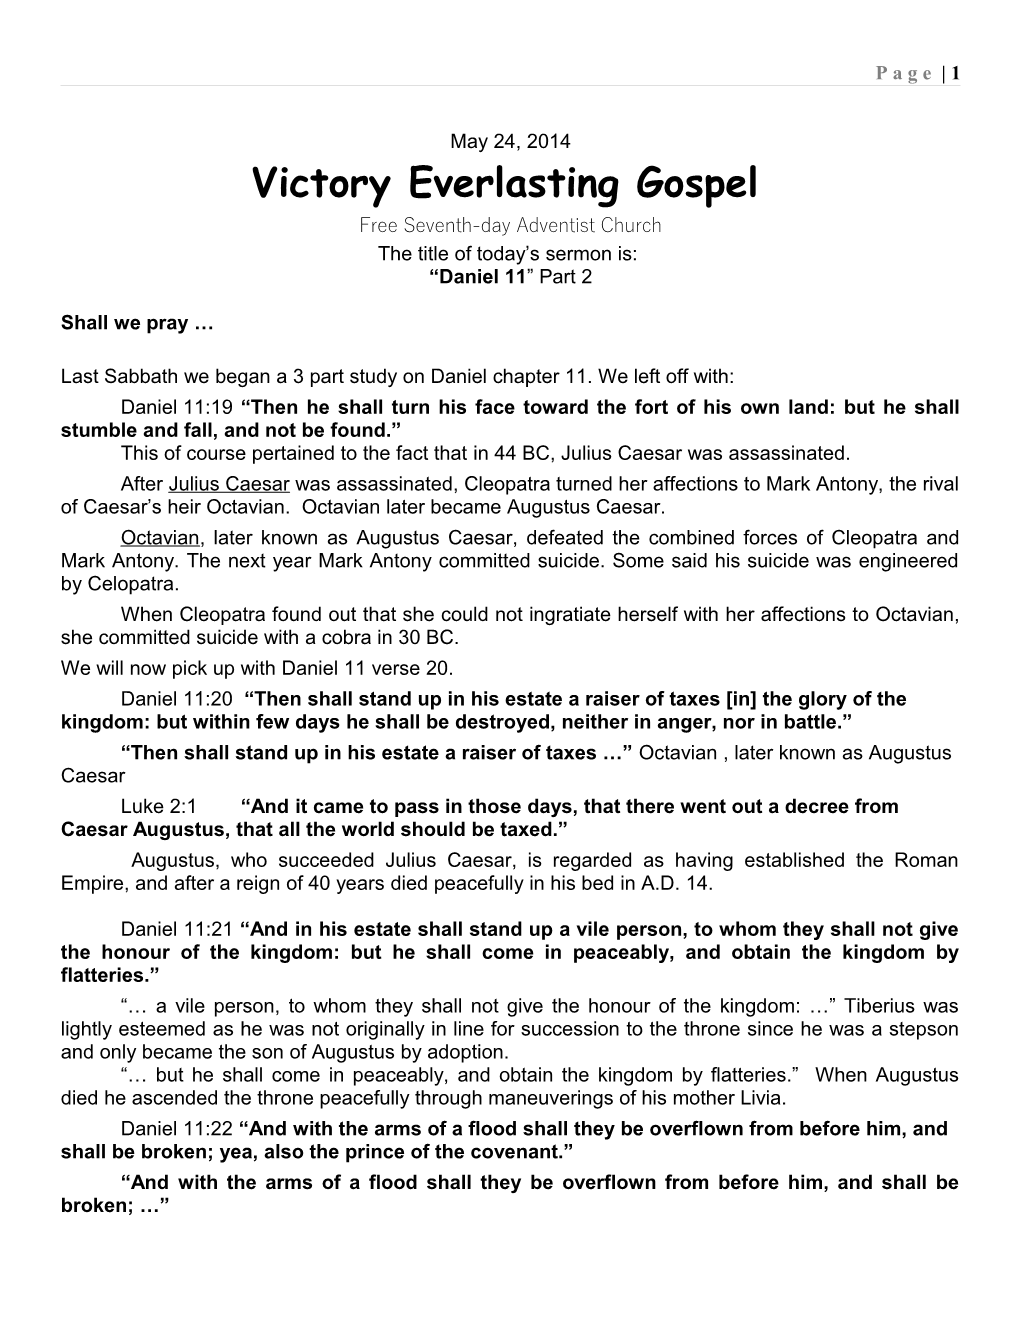 Victory Everlasting Gospel